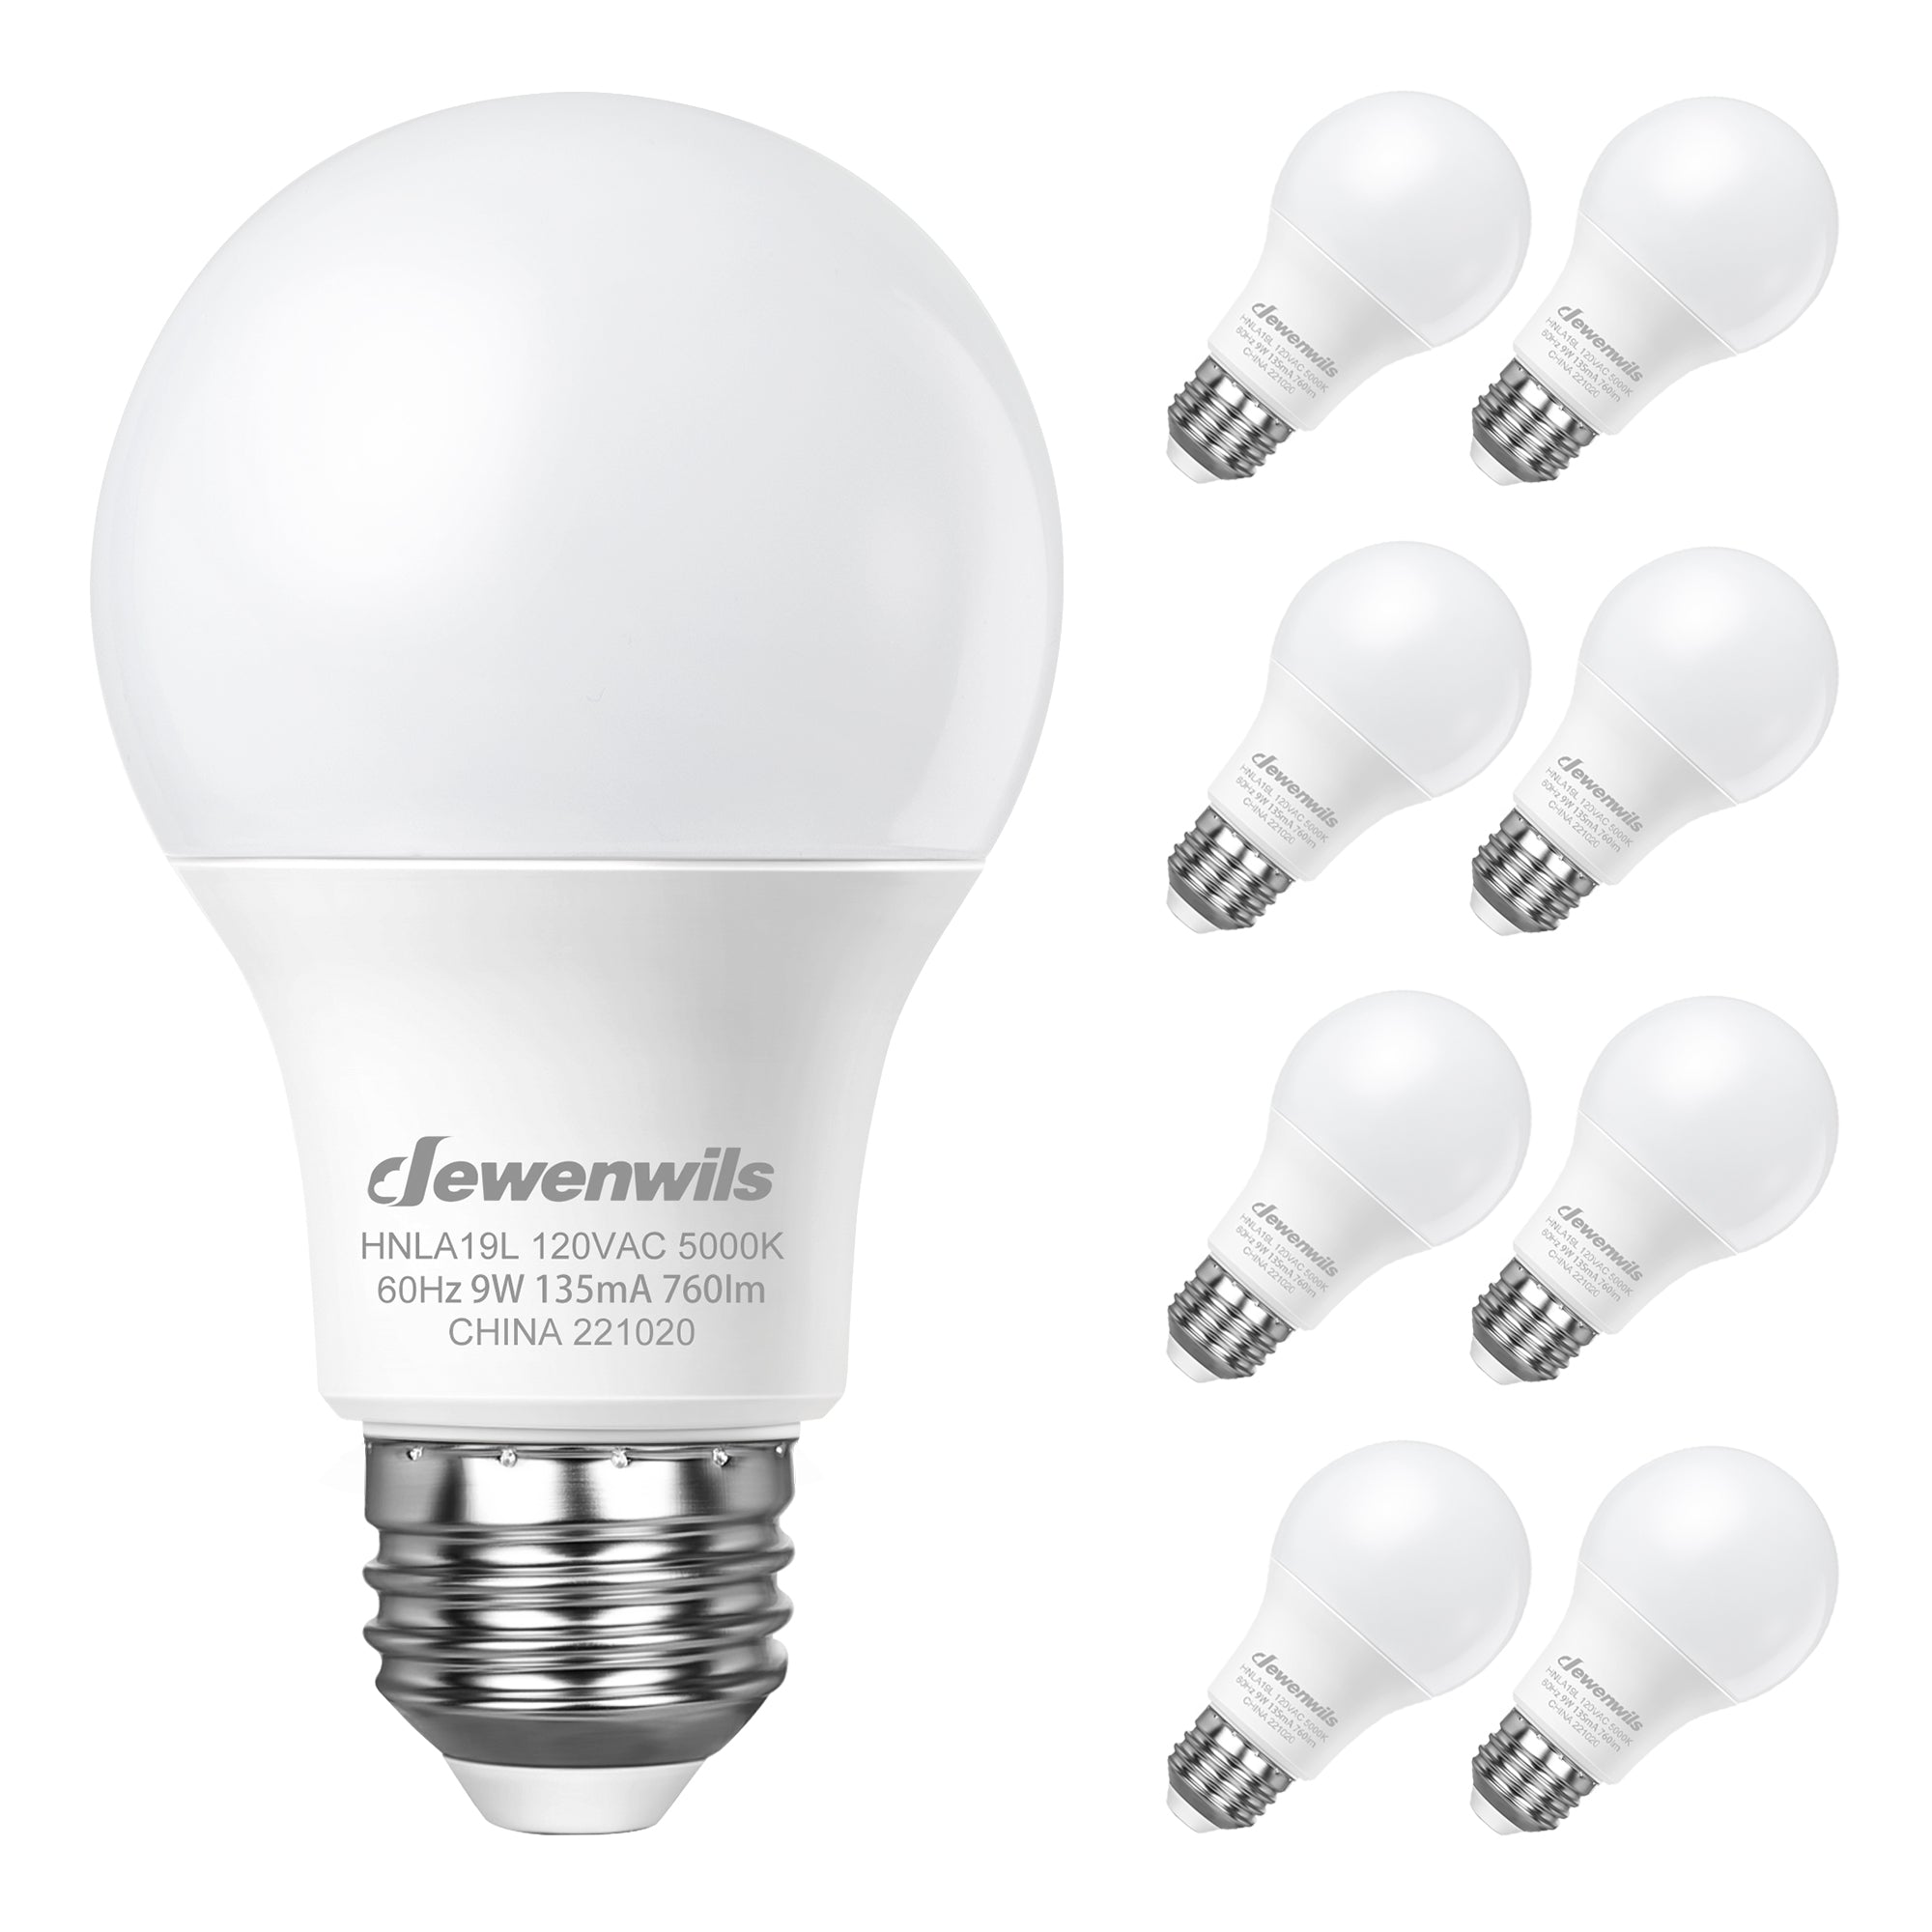 DEWENWILS 8-Pack A19 LED Light Bulb, 760LM, 5000K Daylight LED